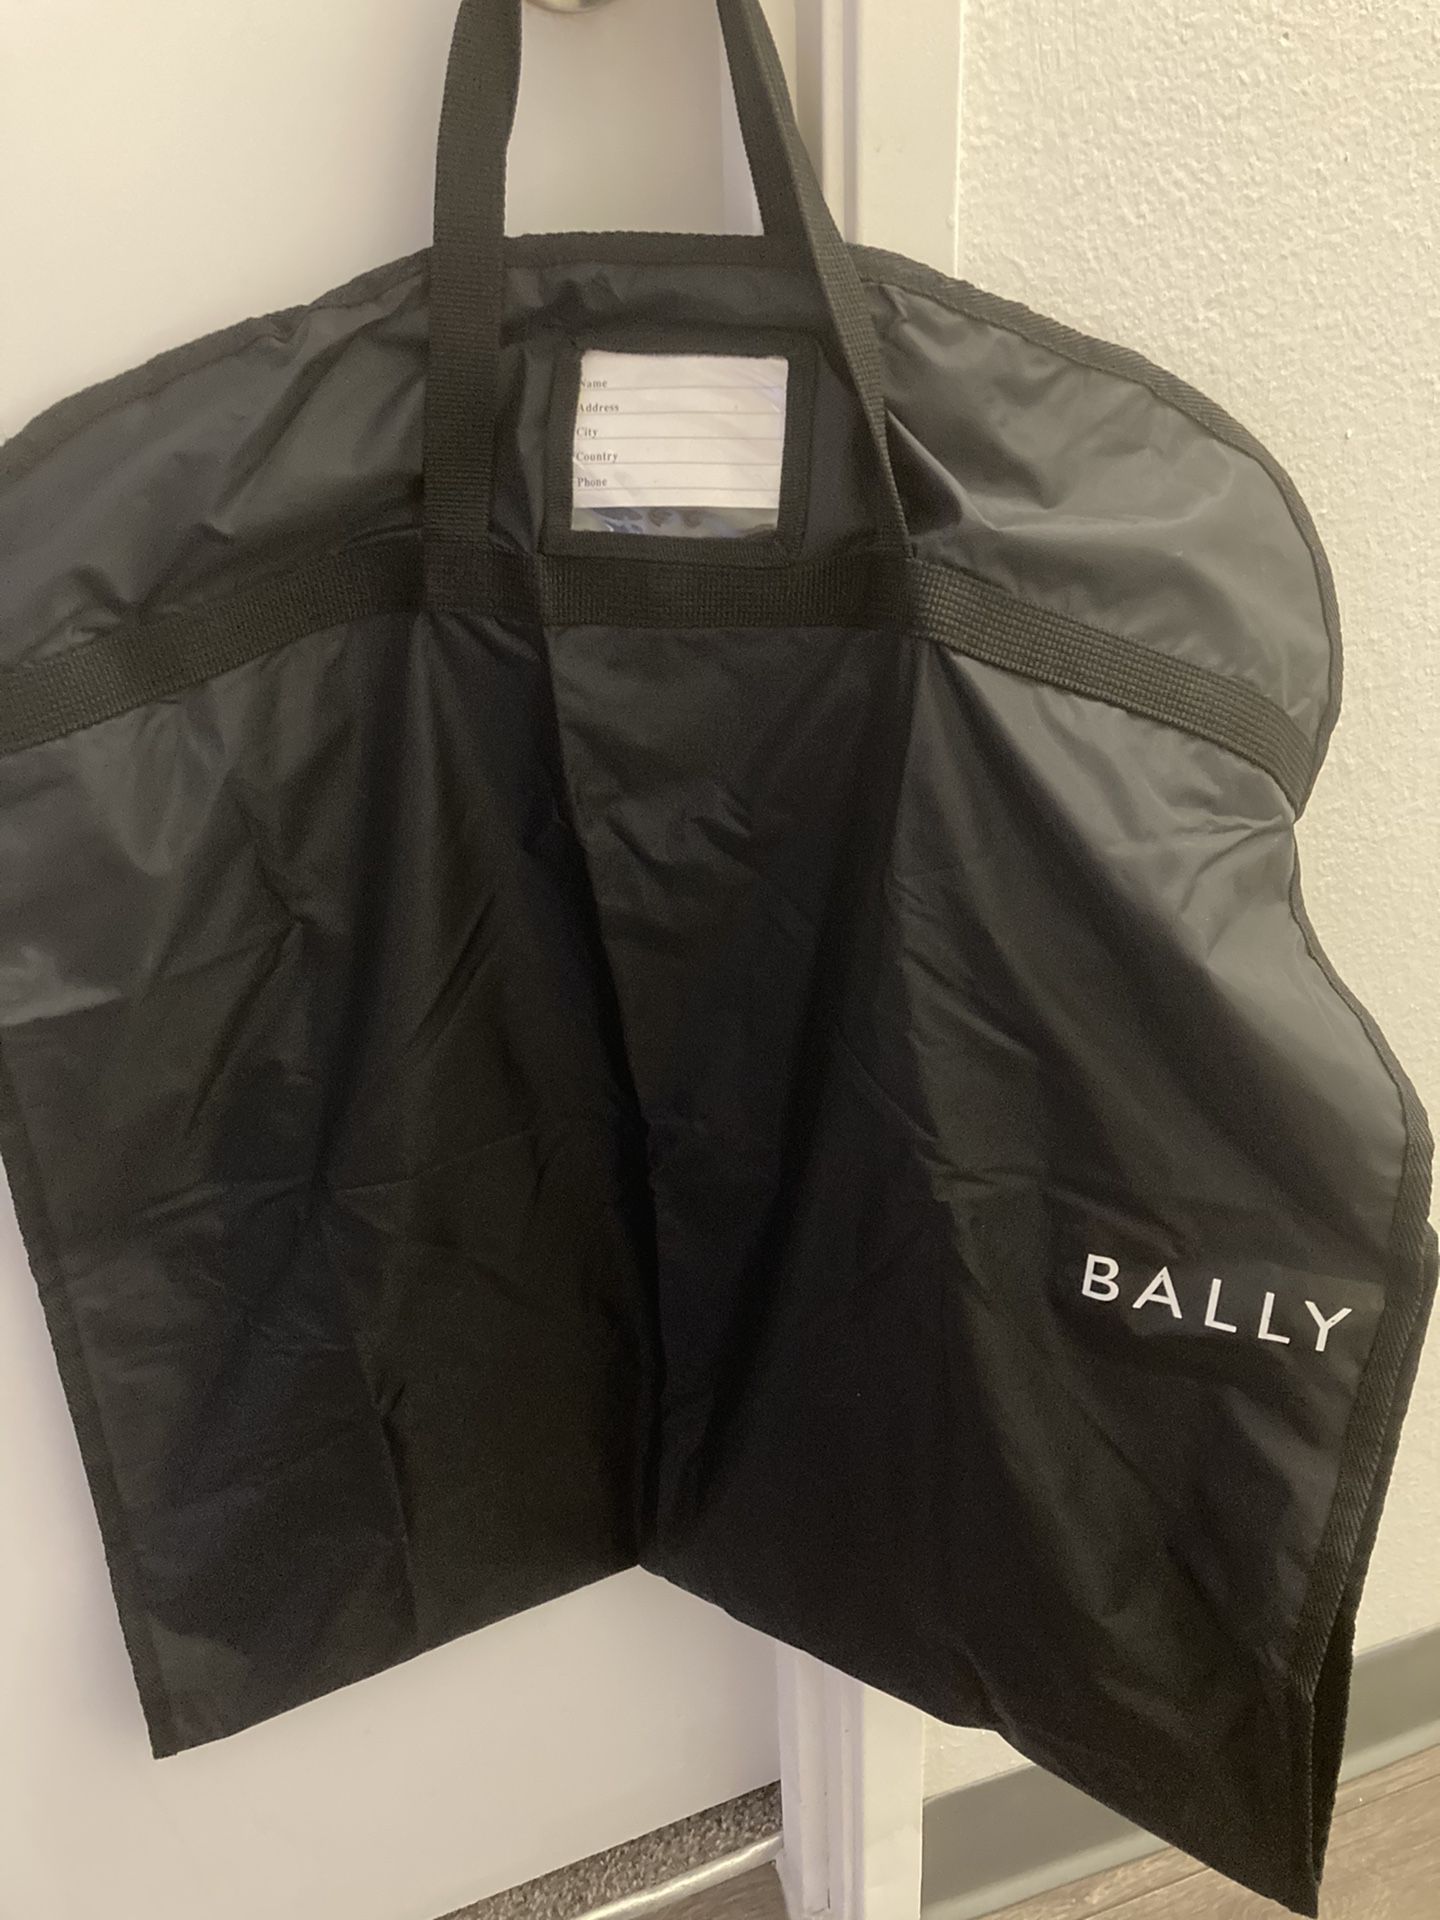 Bally Switzerland Garment Bag